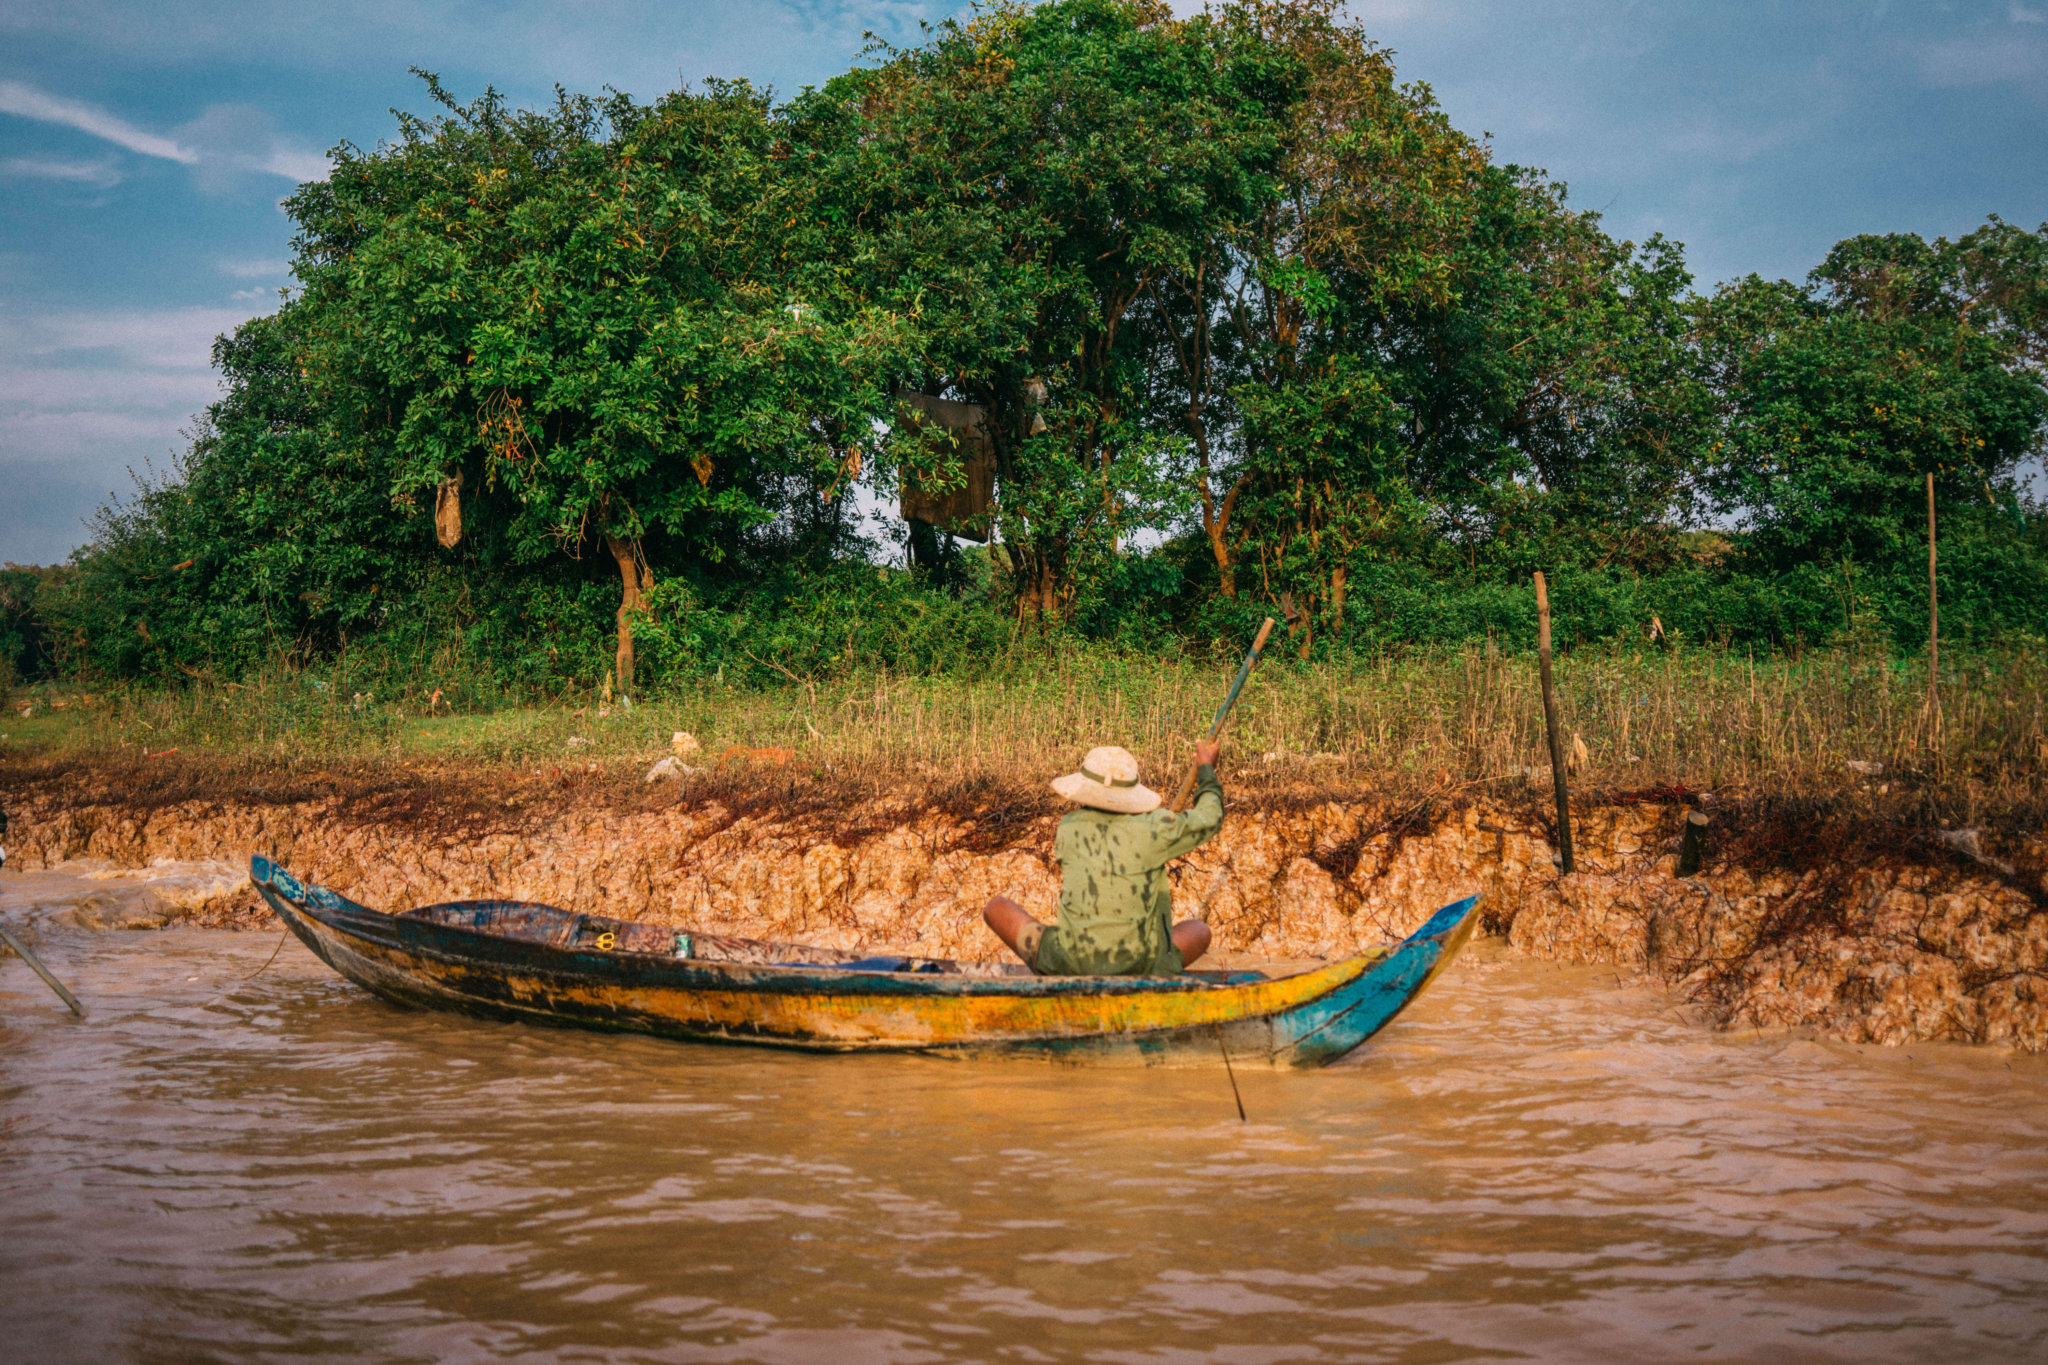 Floating Village of Chong Khneas, Chong Kneas, Floating Village, Siem Reap, Tonle Sap Lake, Cambodia, floating houses, house boat, southeast asia, man on small boat, man on small fishing boat, cambodian man fishing